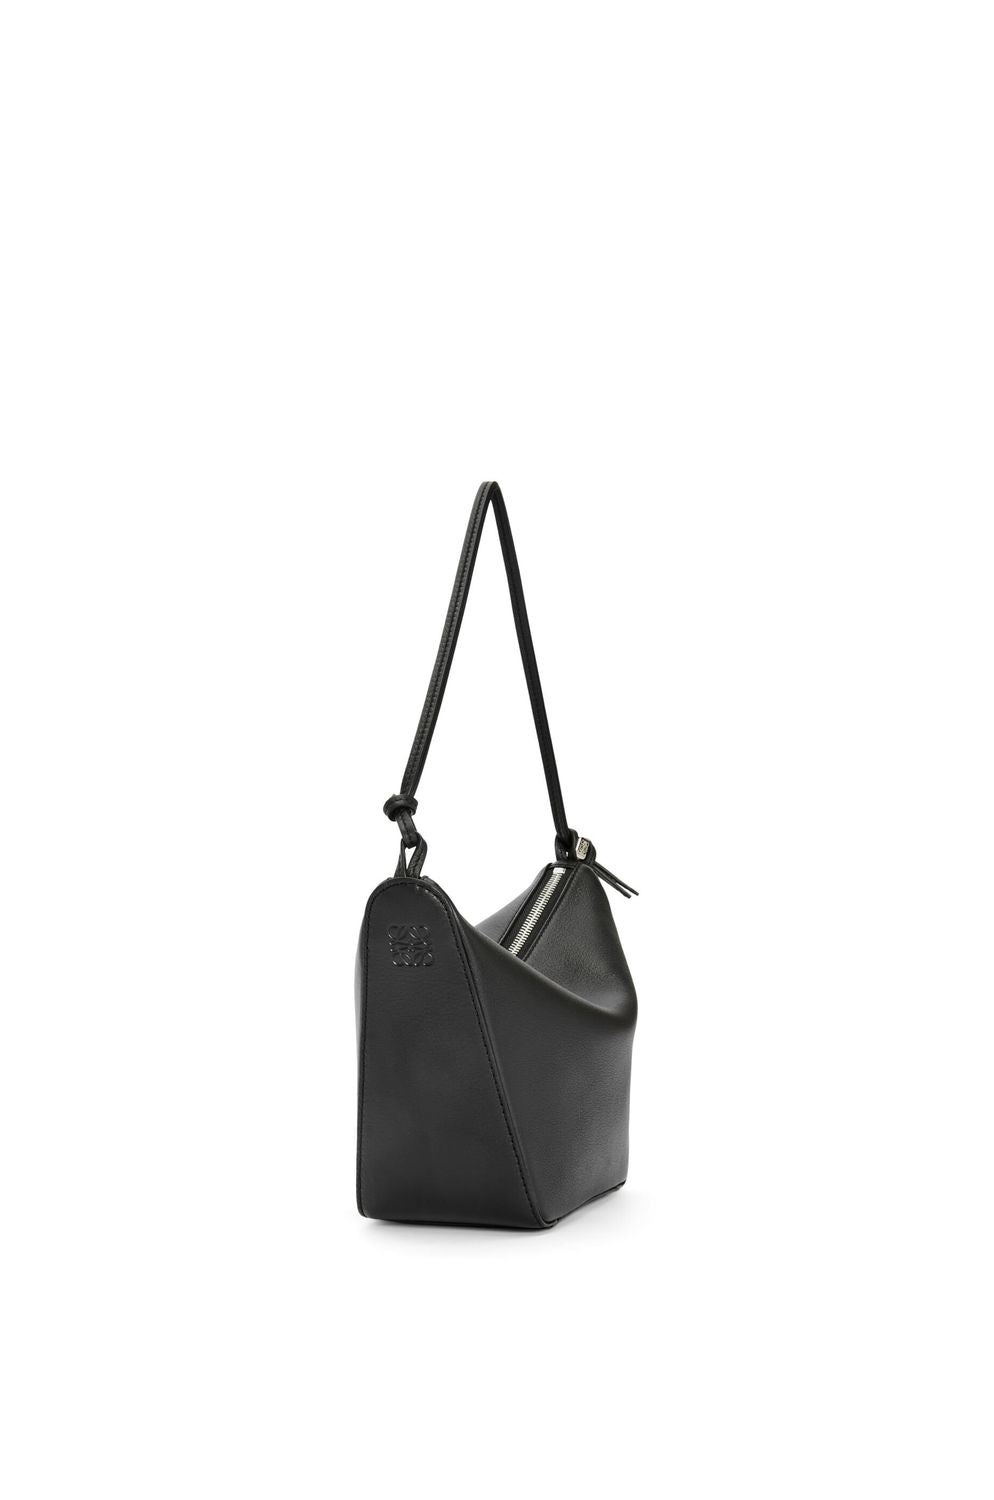 LOEWE Mini Hammock Hobo Handbag in Black Calfskin for Women